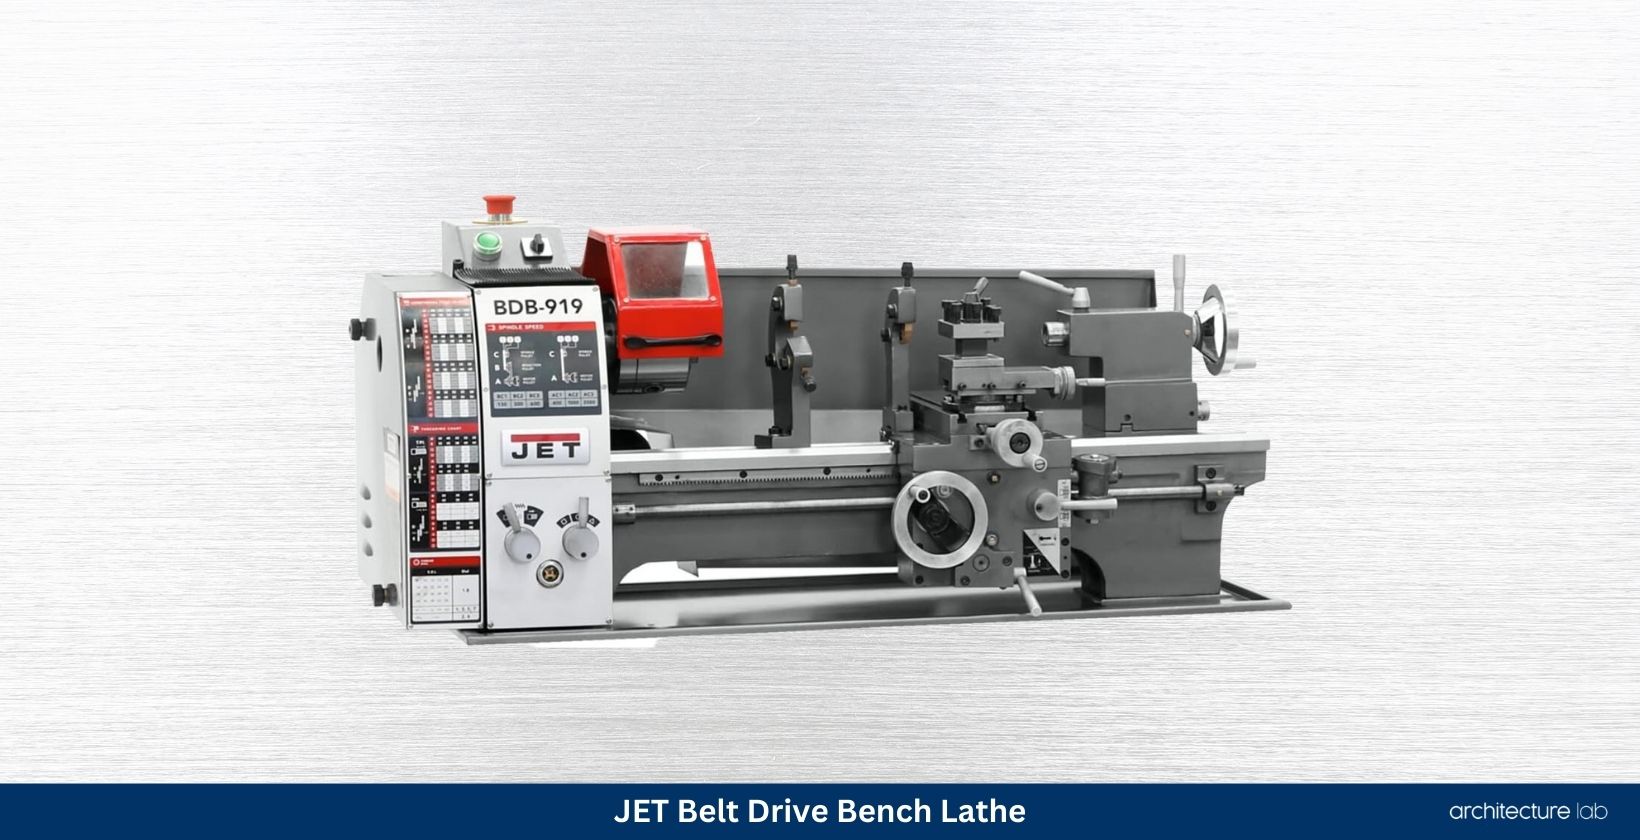 Jet belt drive